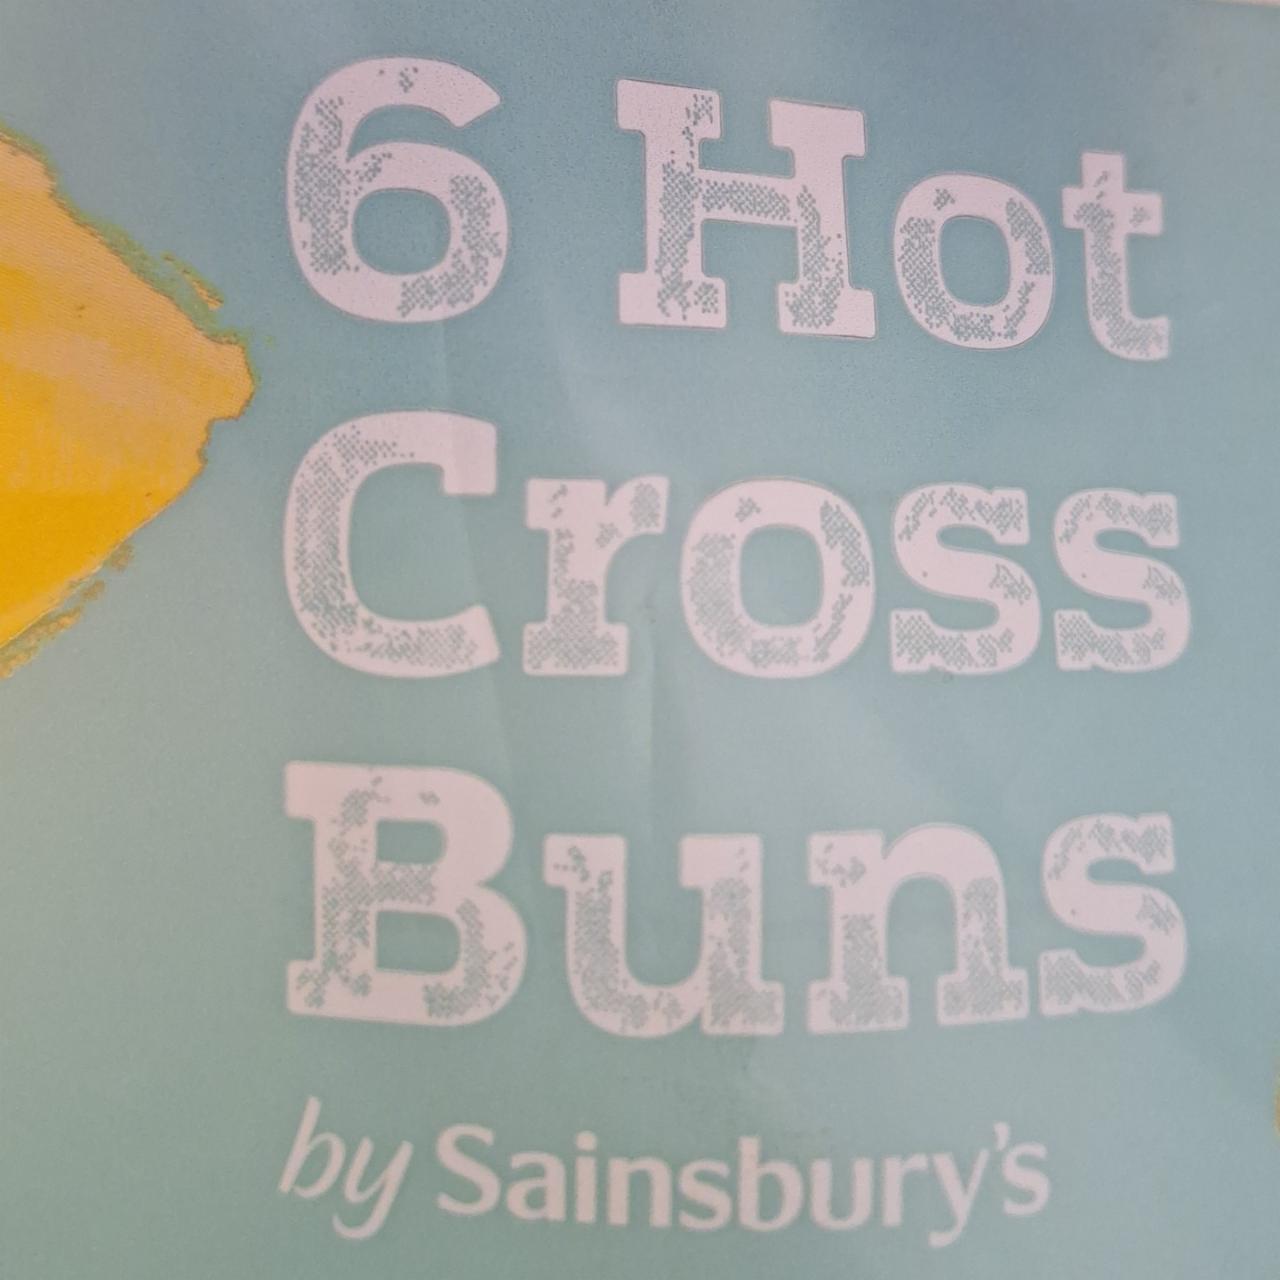 Fotografie - 6 Hot Cross Buns by Sainsbury's